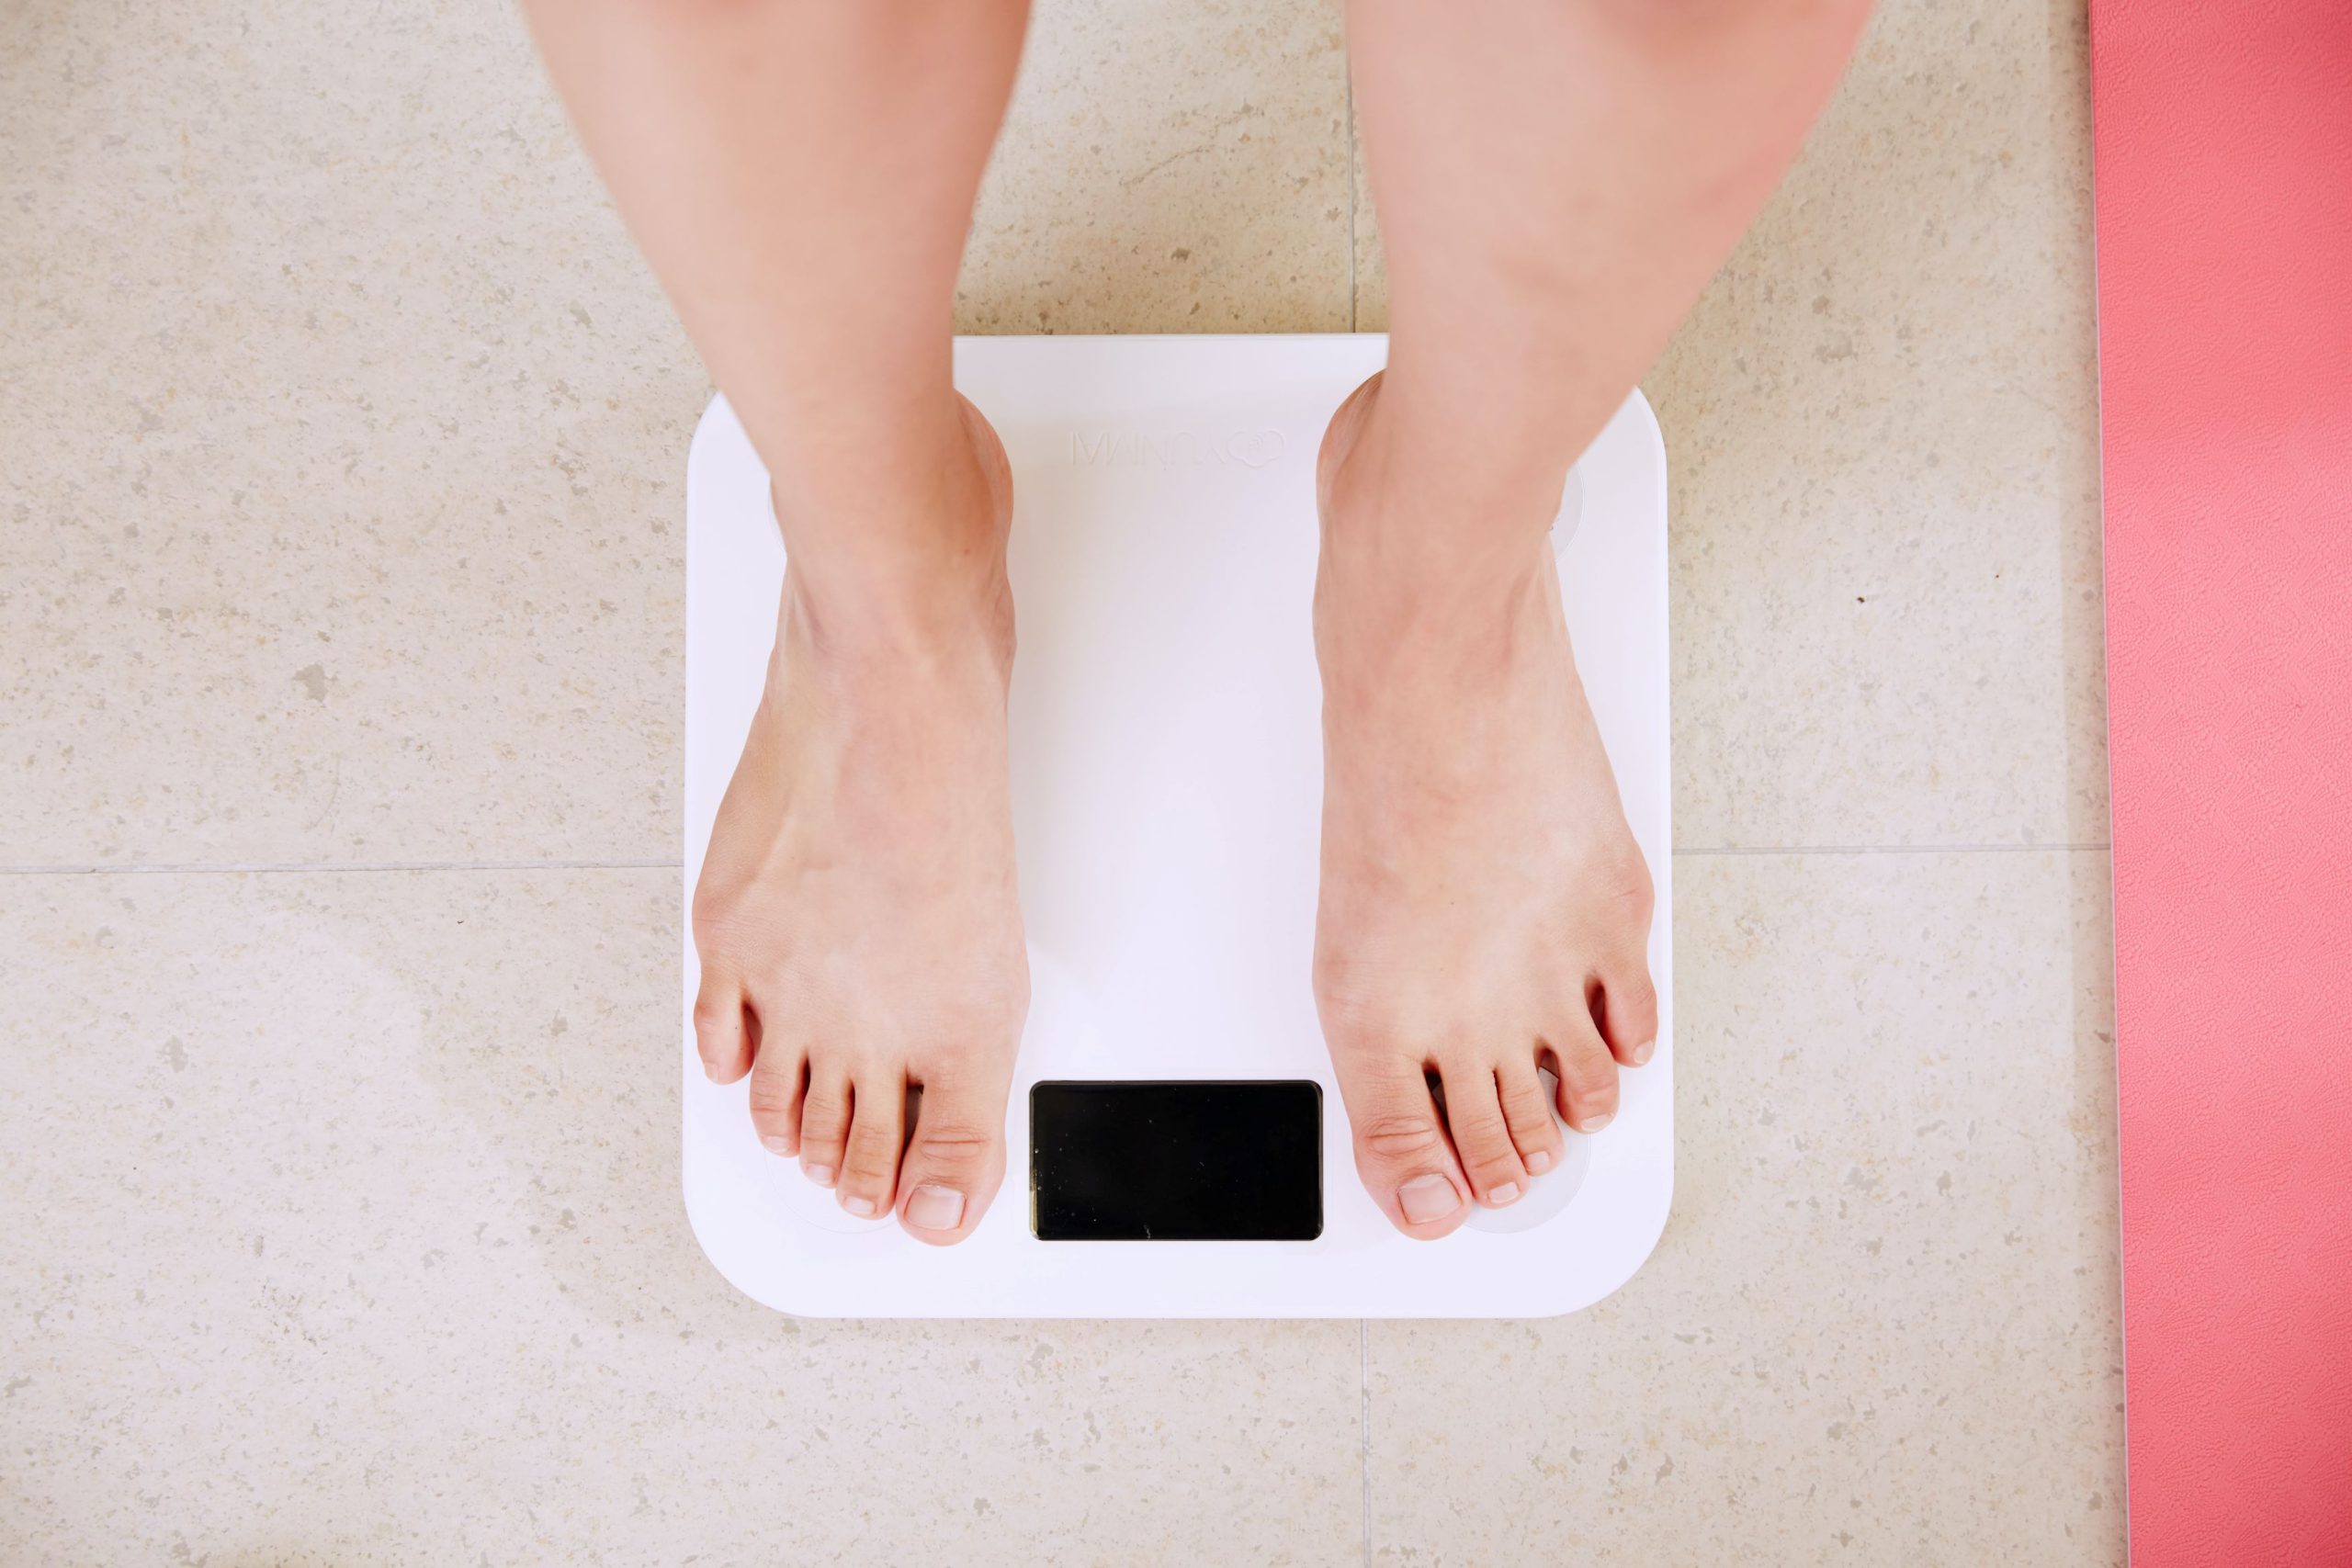 Obesity -- reducing stigma, focusing on health